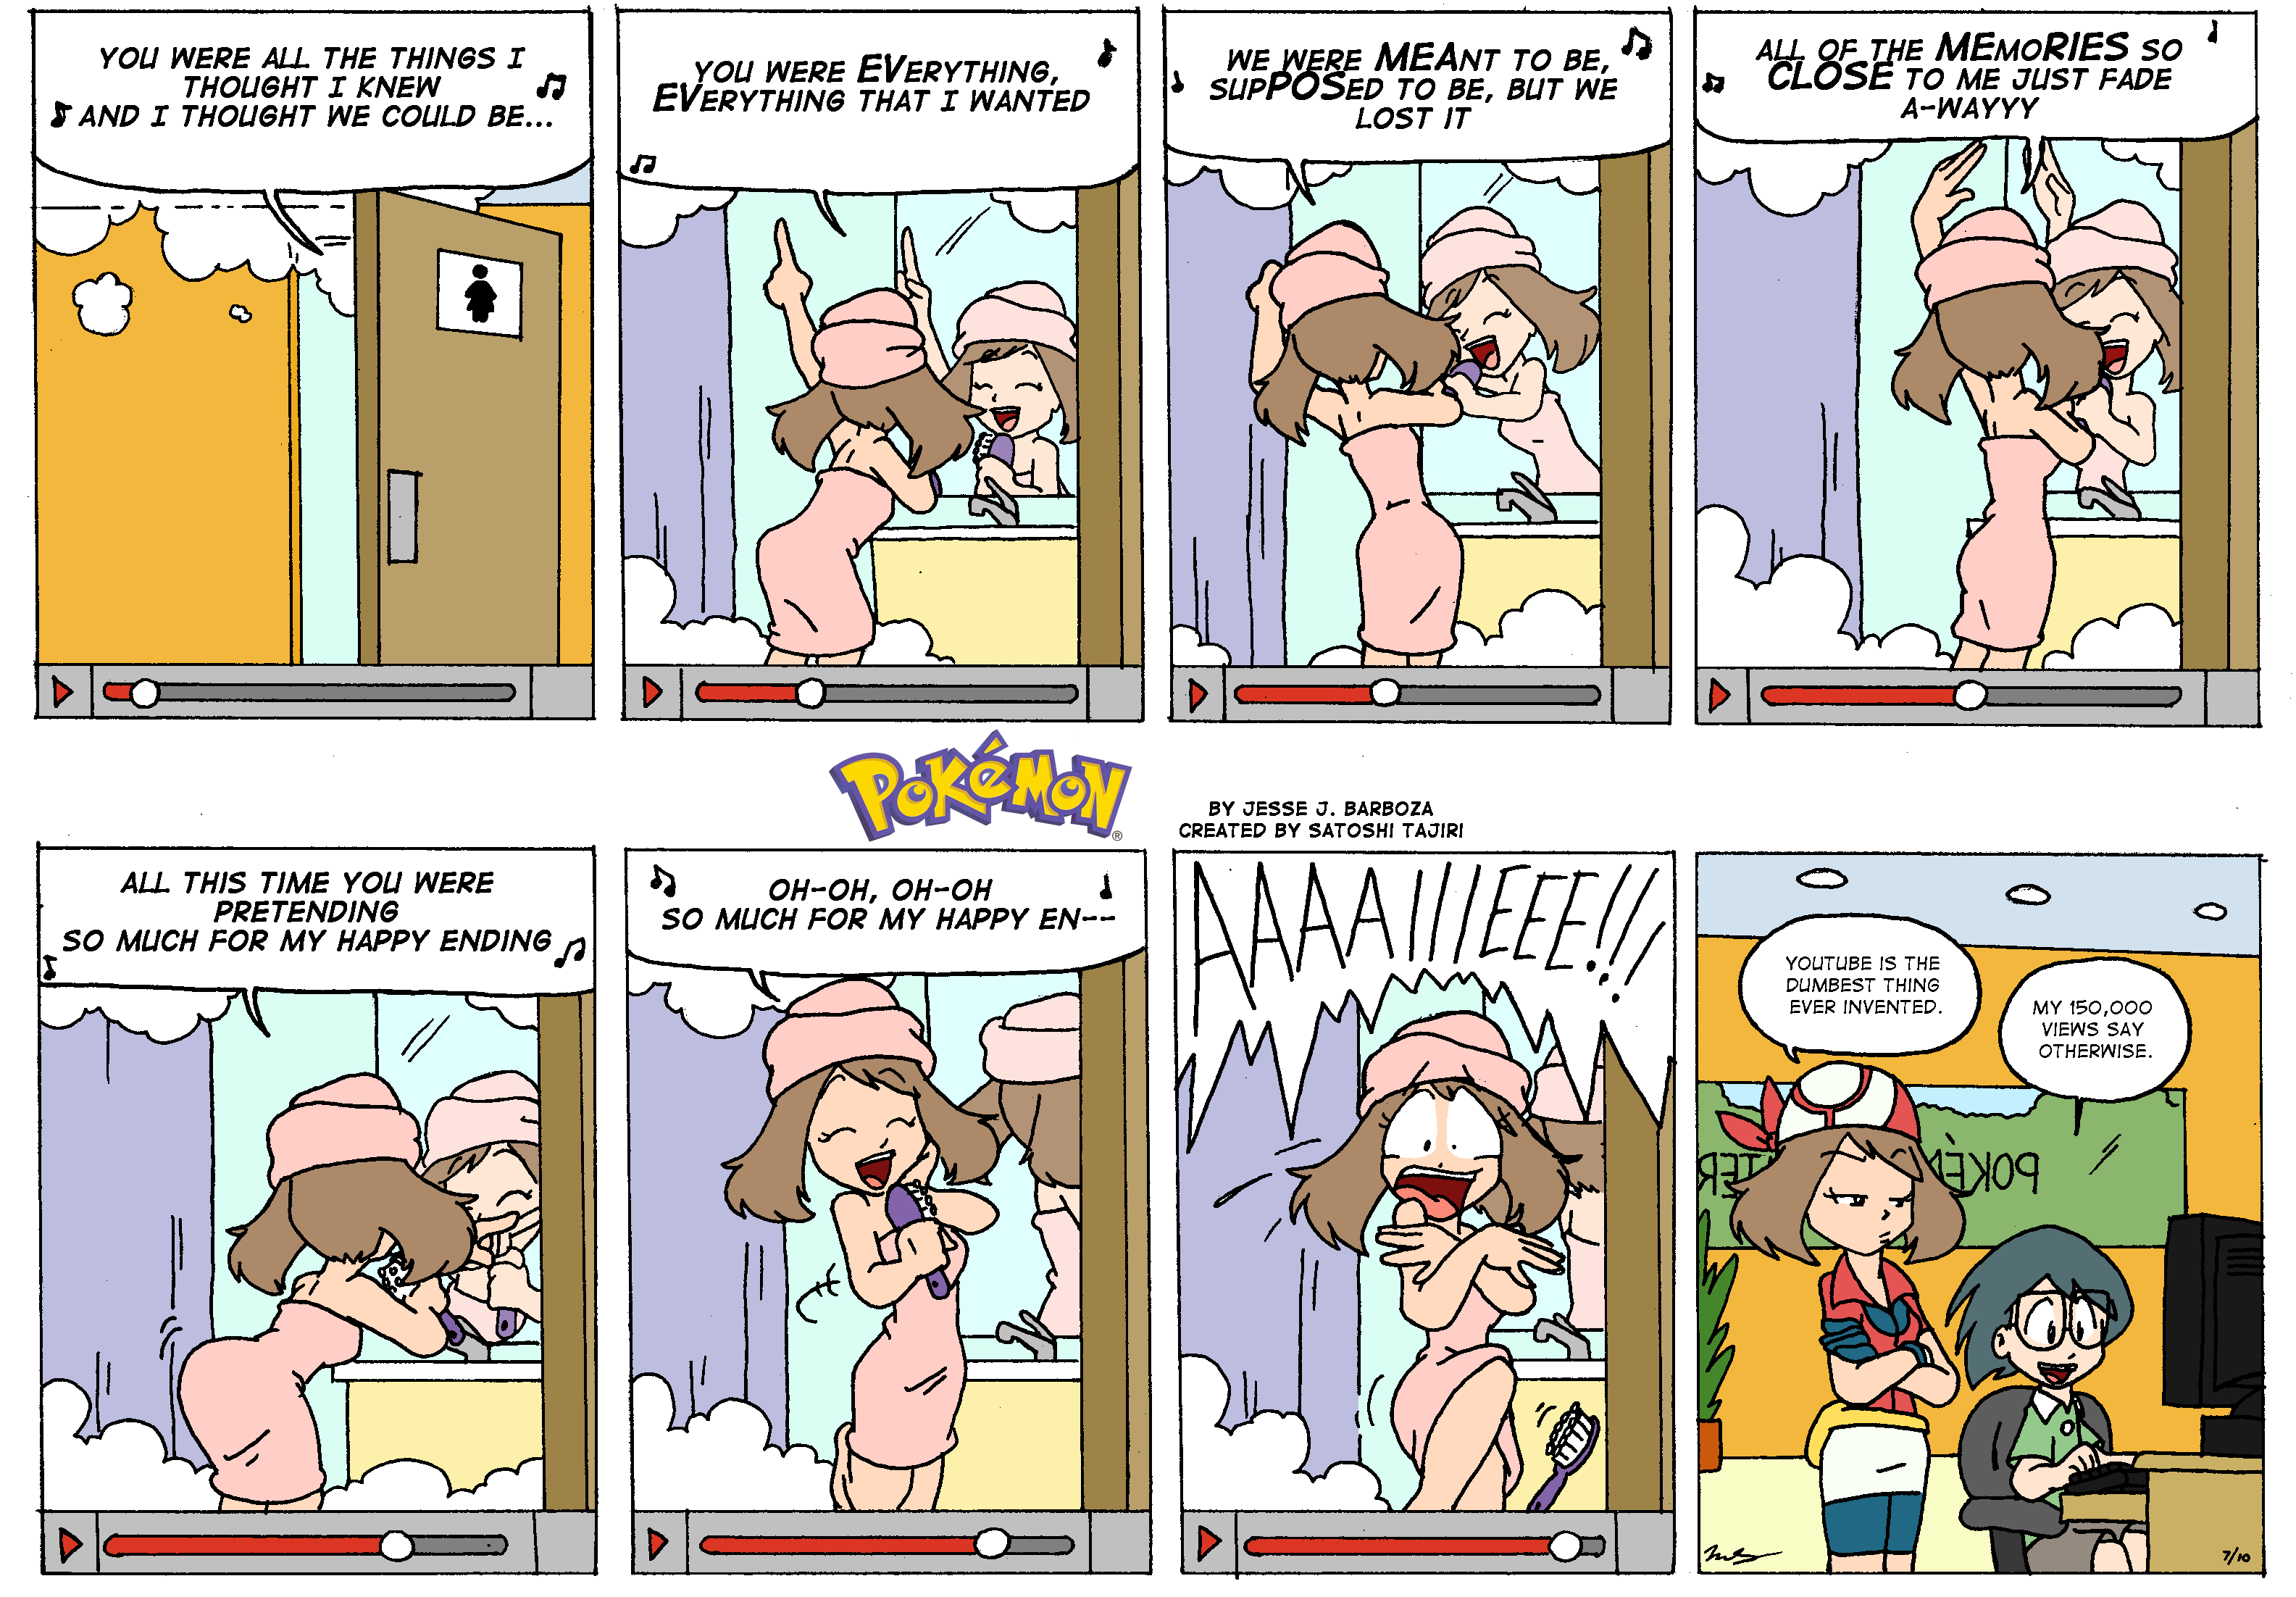 Funny Pokemon comics